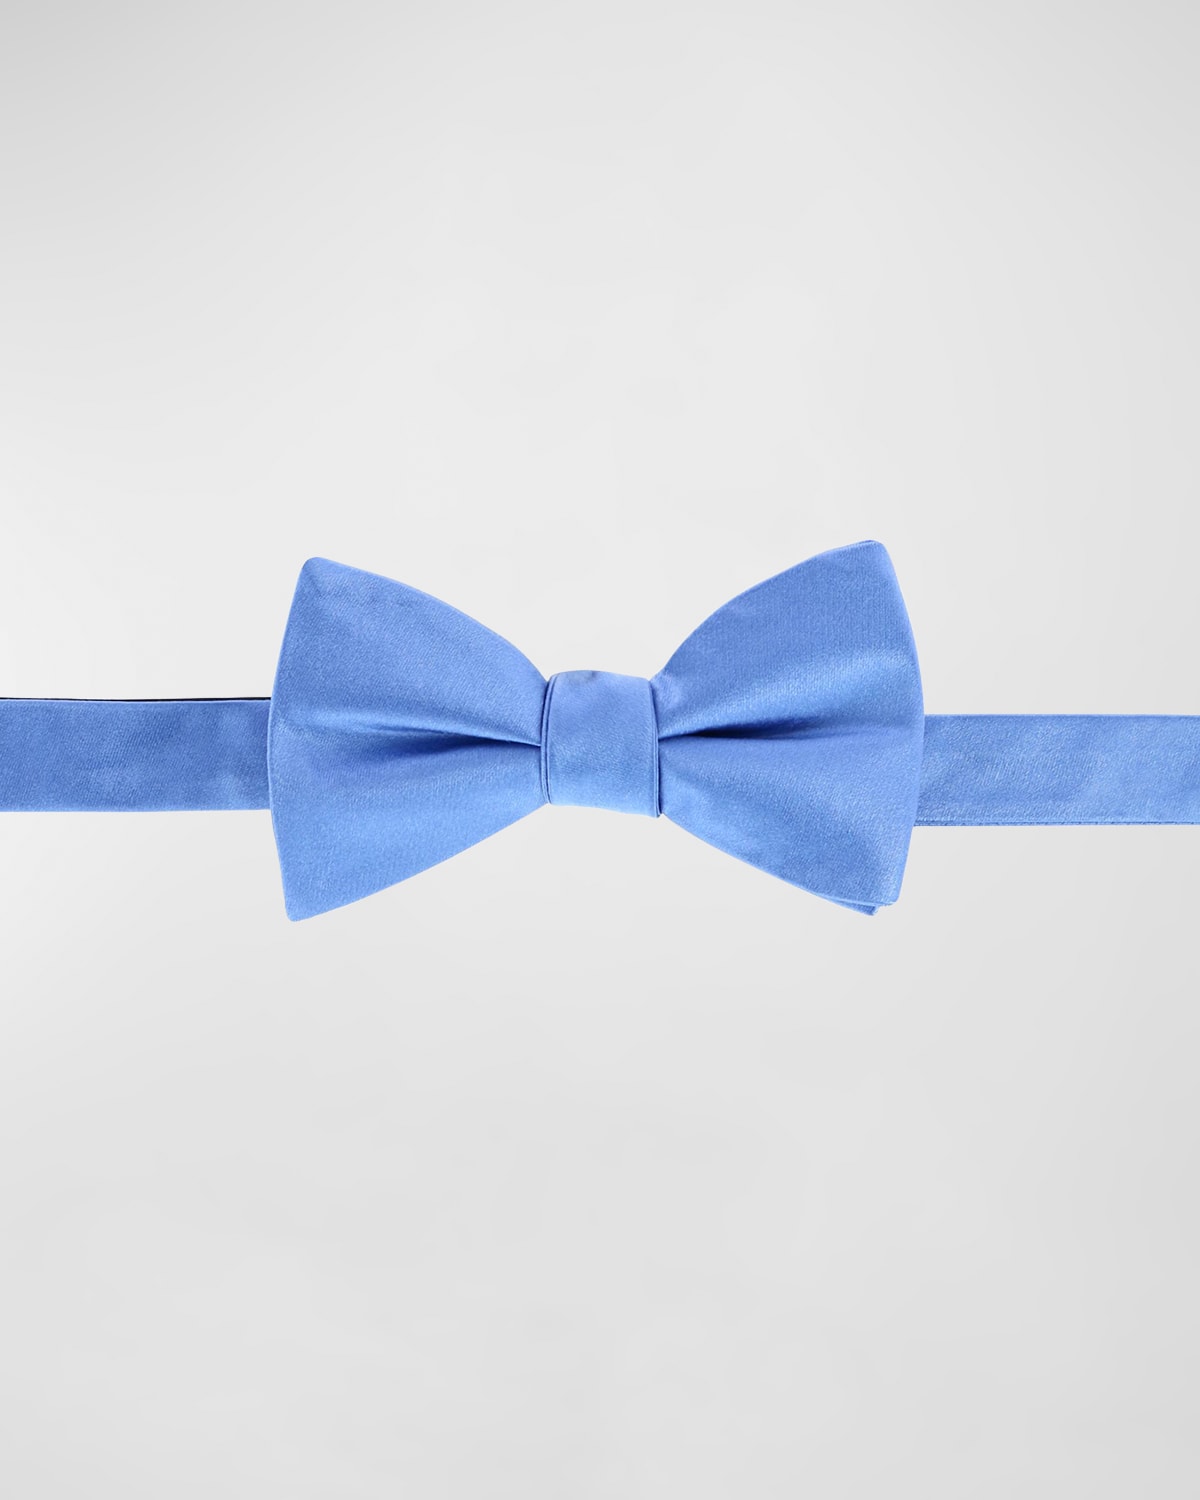 Trafalgar Sutton Solid Color Silk Bow Tie In Light Blue